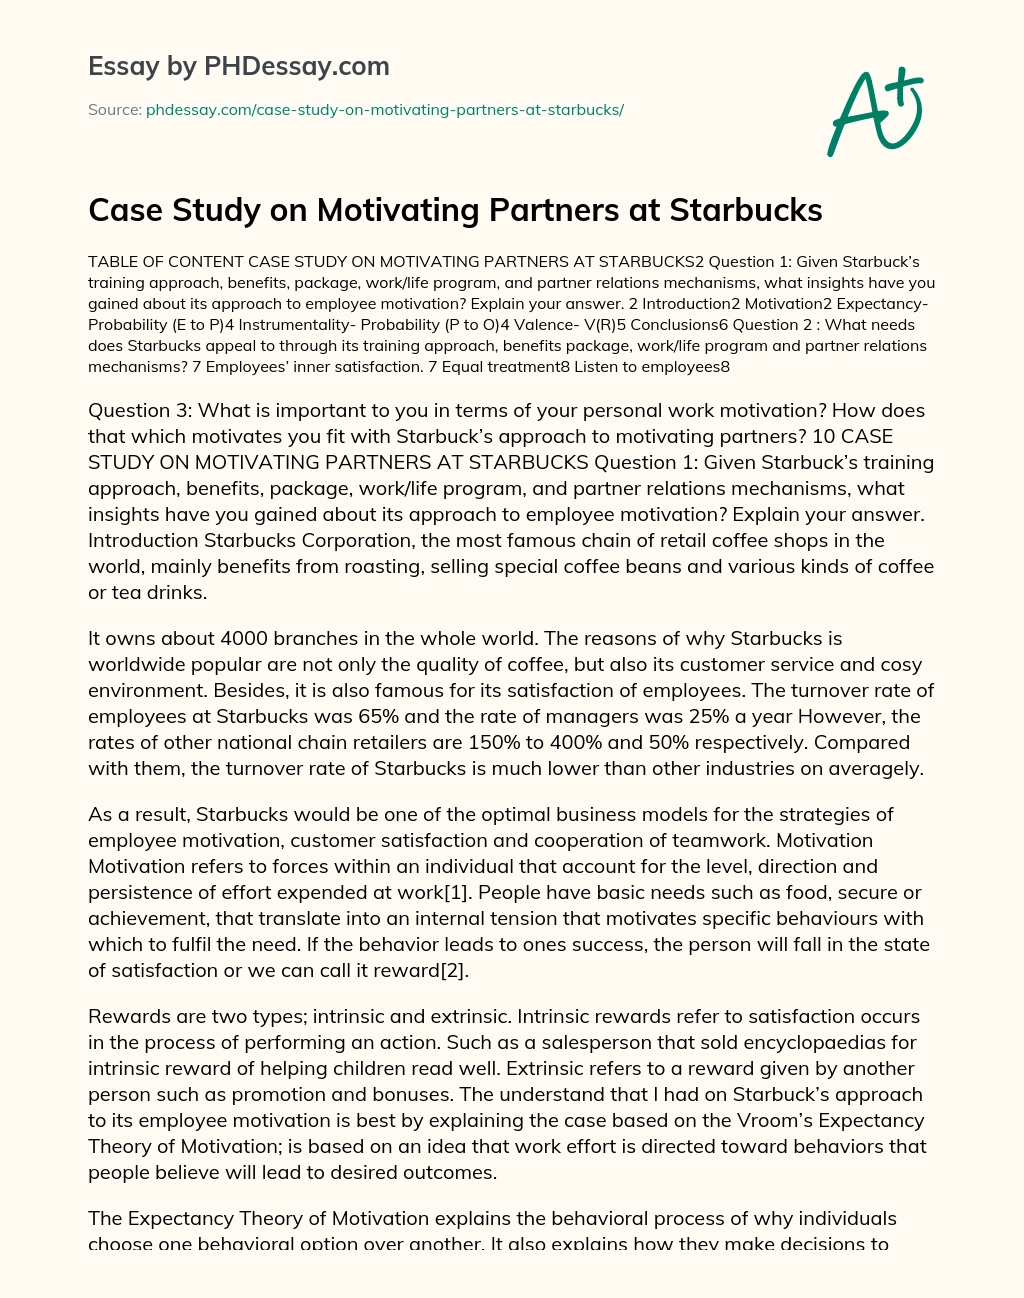 Case Study on Motivating Partners at Starbucks essay